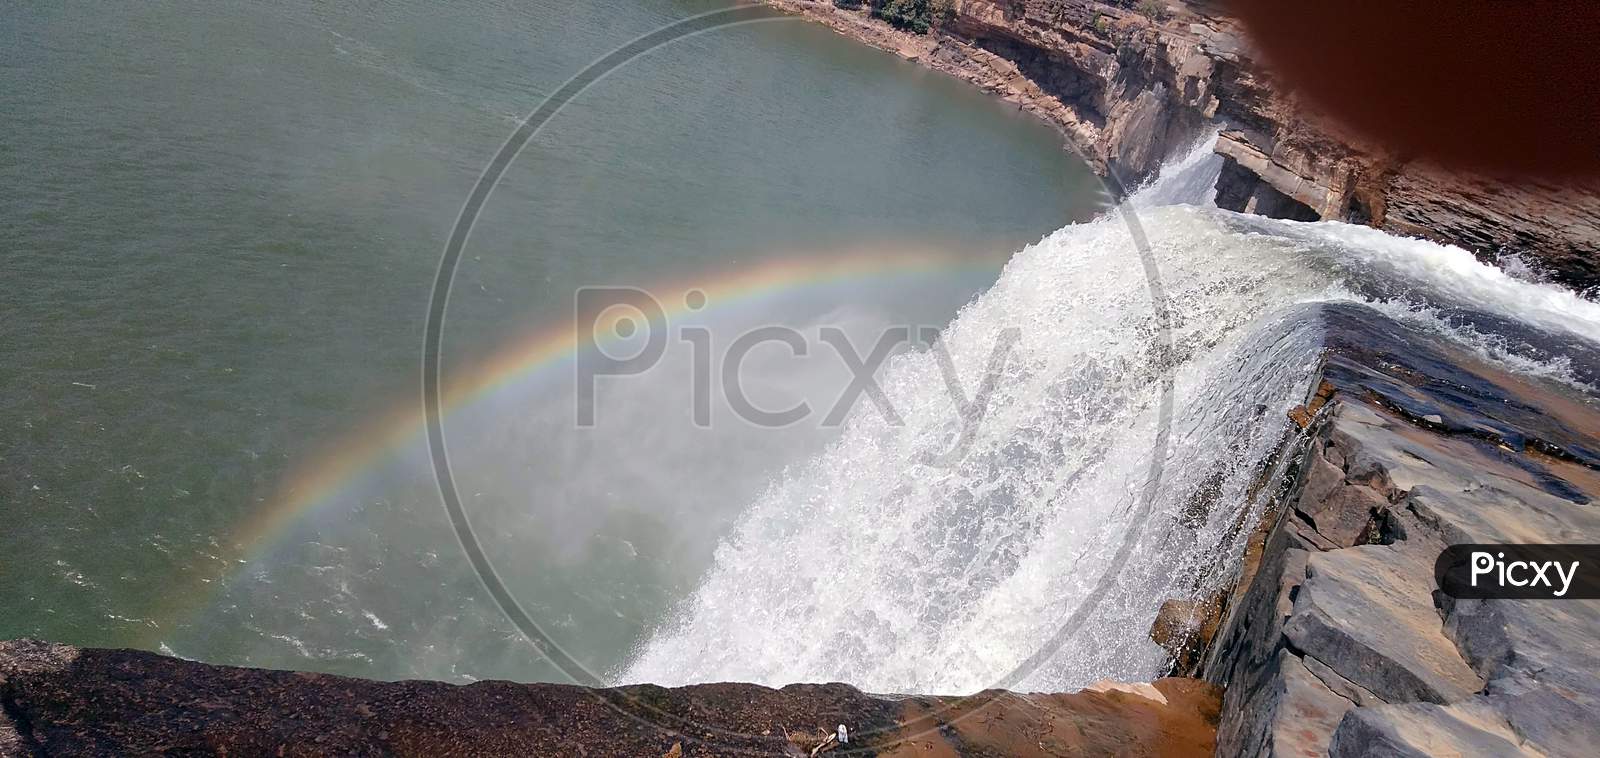 rainbow formation in the fountain of Chitrakoot waterfall of jagdalpur in bastar os chhattisgarh India.